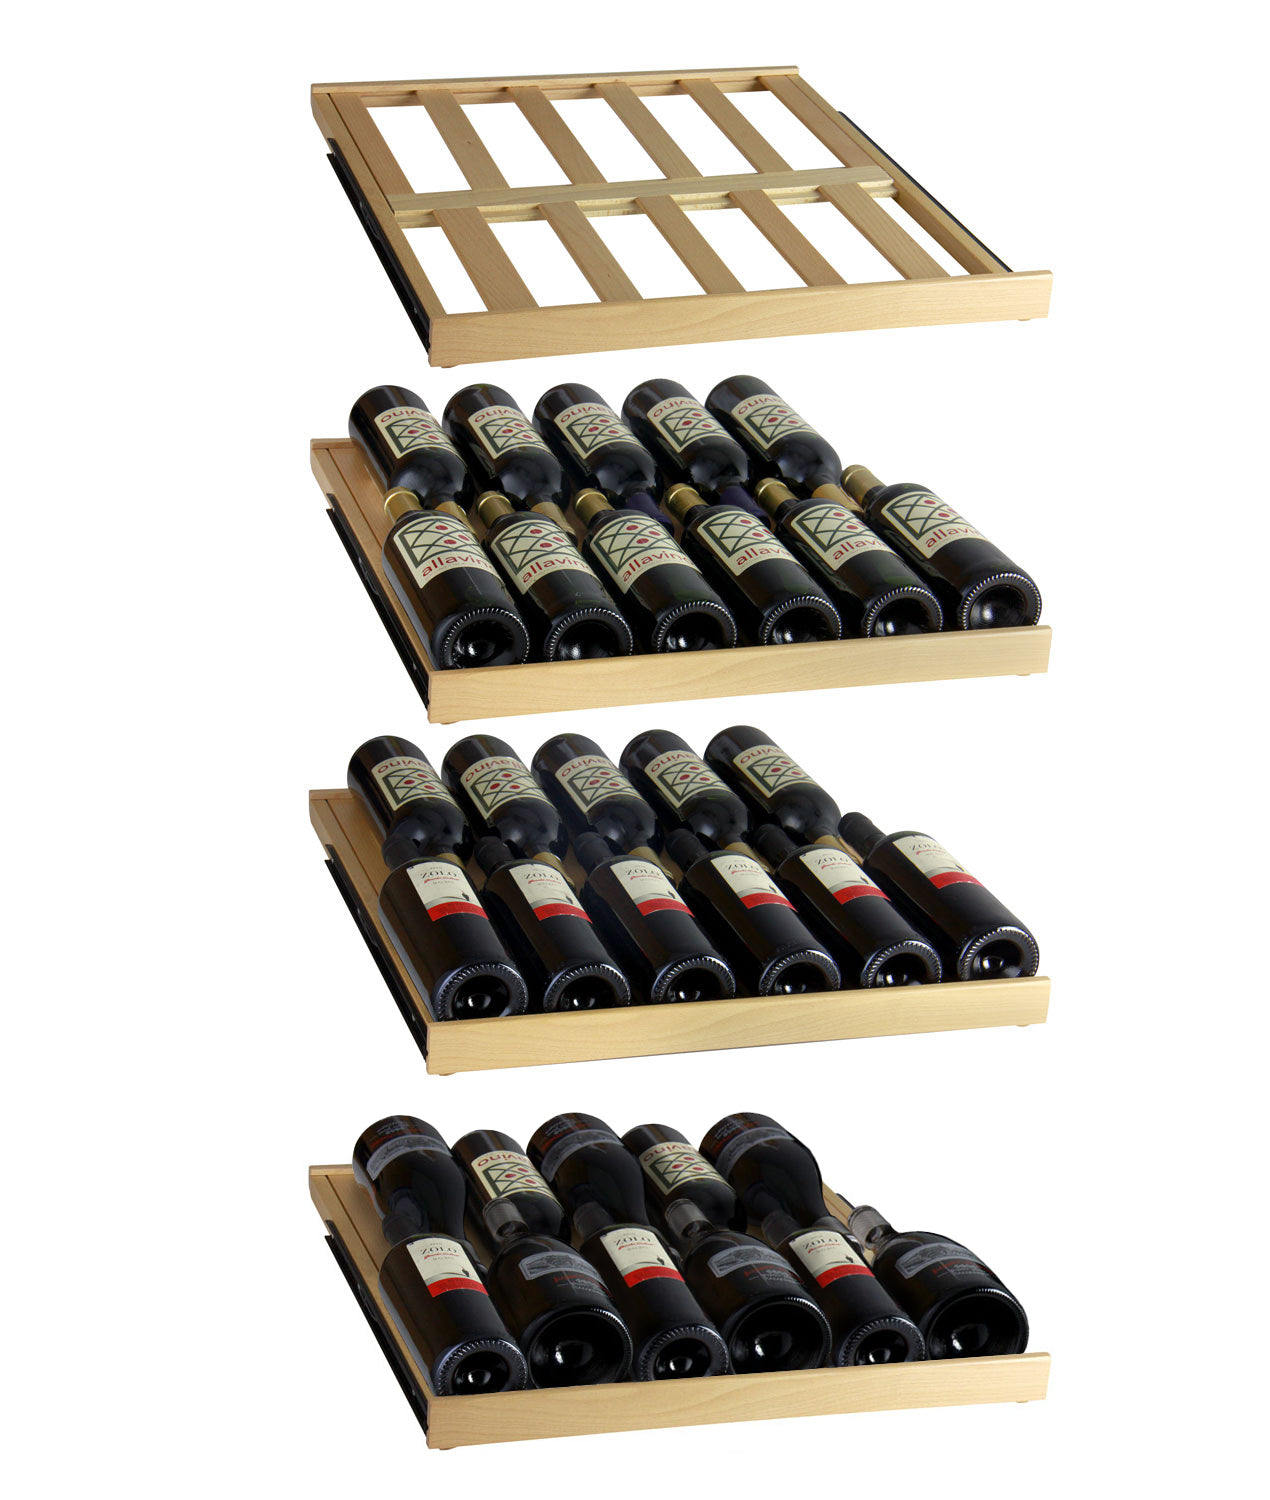 Allavino - 24"  172-Bottle Dual-Zone Wine Cooler (AO YHWR172)